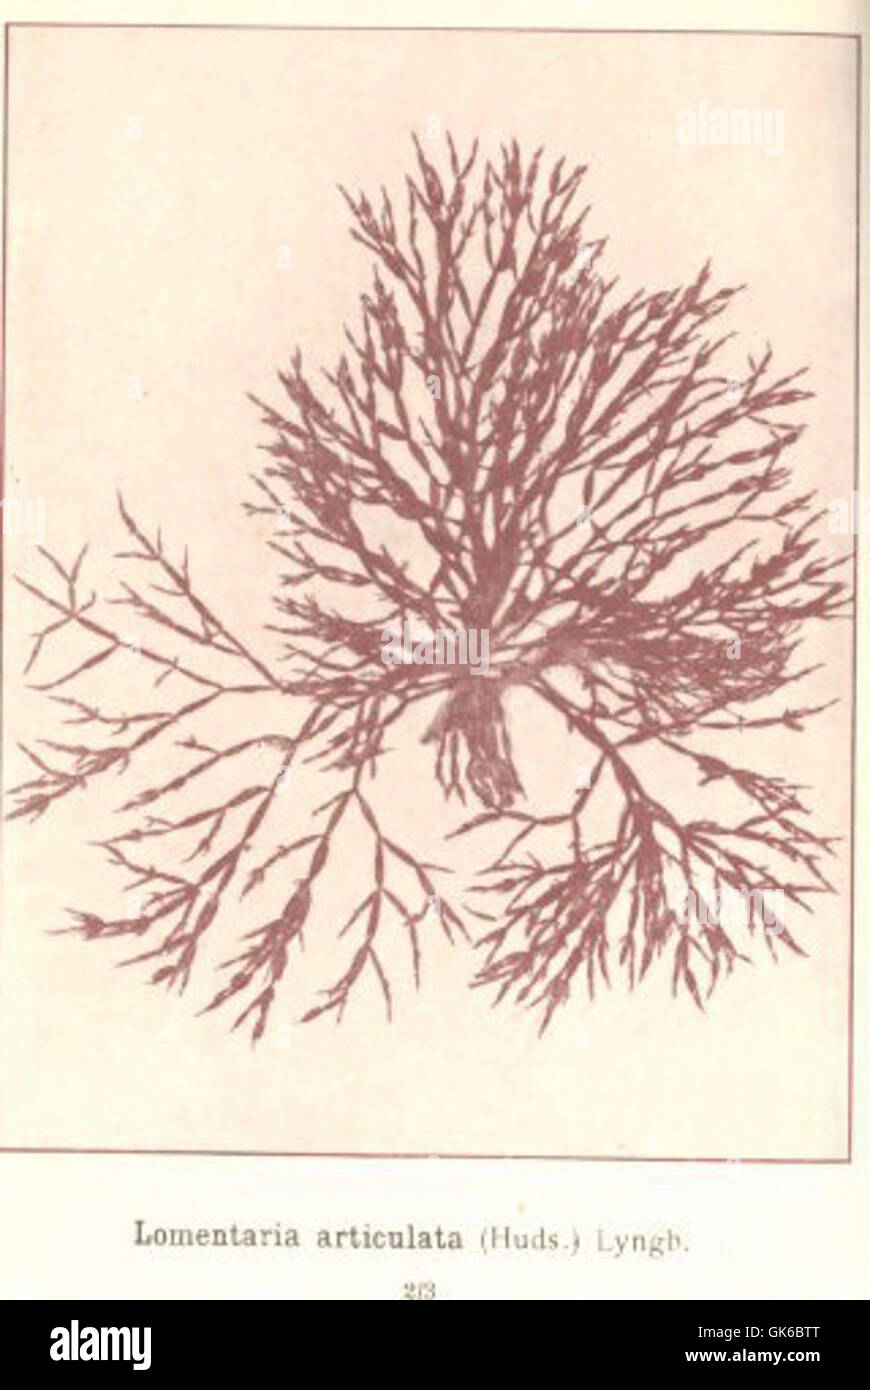 53625 Rhodophycees ou Floridees (Algues rouges) Rhodymeniees, Lomentaria articulata (Huds) Lyngb Stock Photo